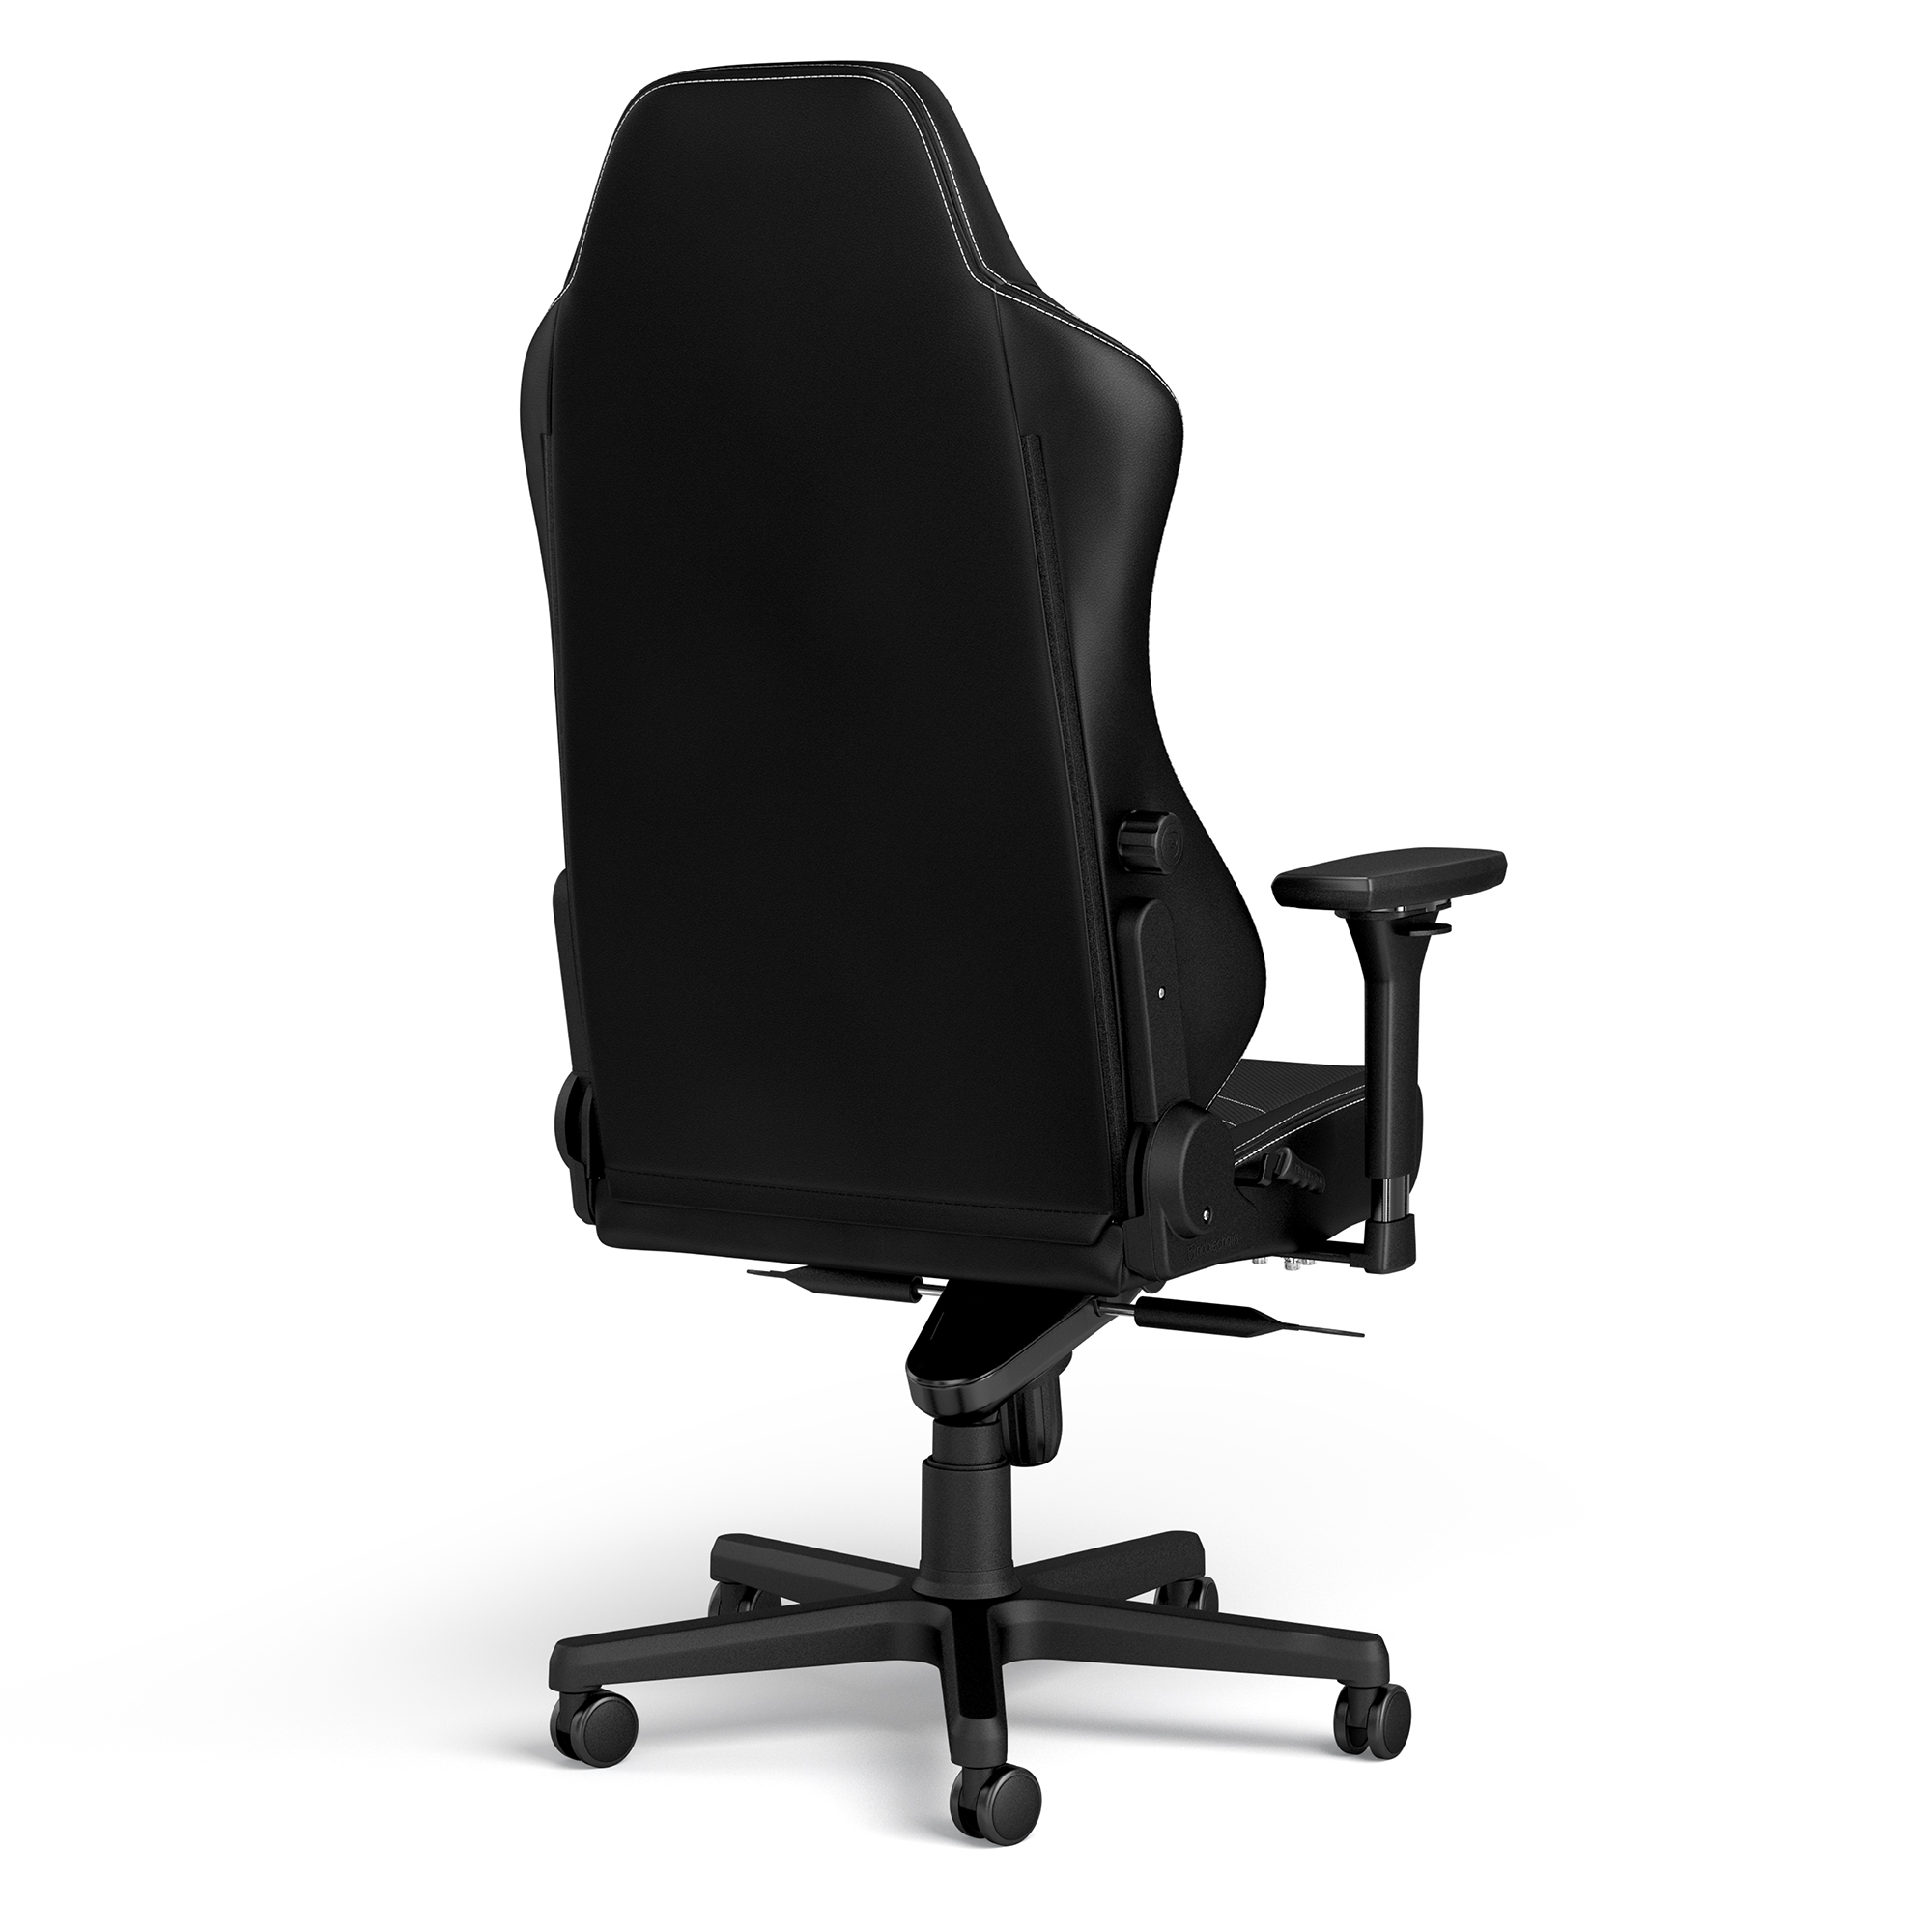 noblechairs HERO Gaming Chair - Black/White